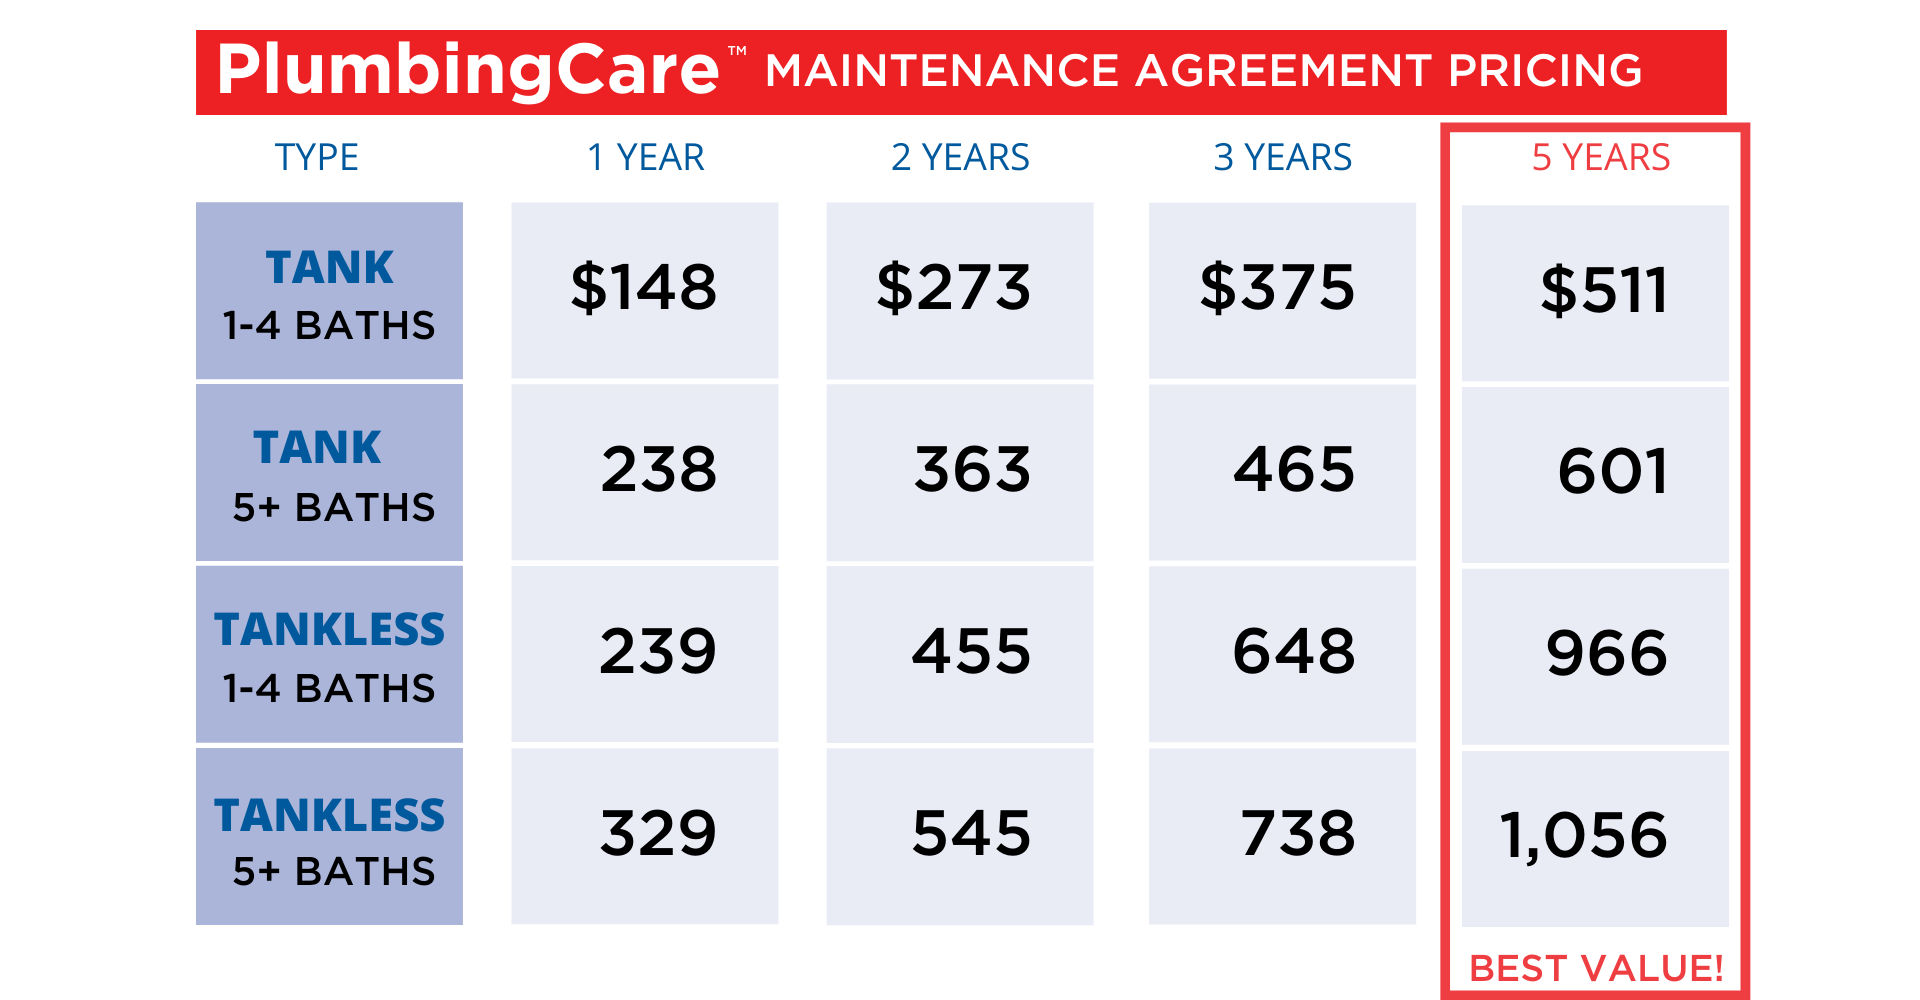 plumbingcare-maintenance-pricing-matrix-cr21wi001.png